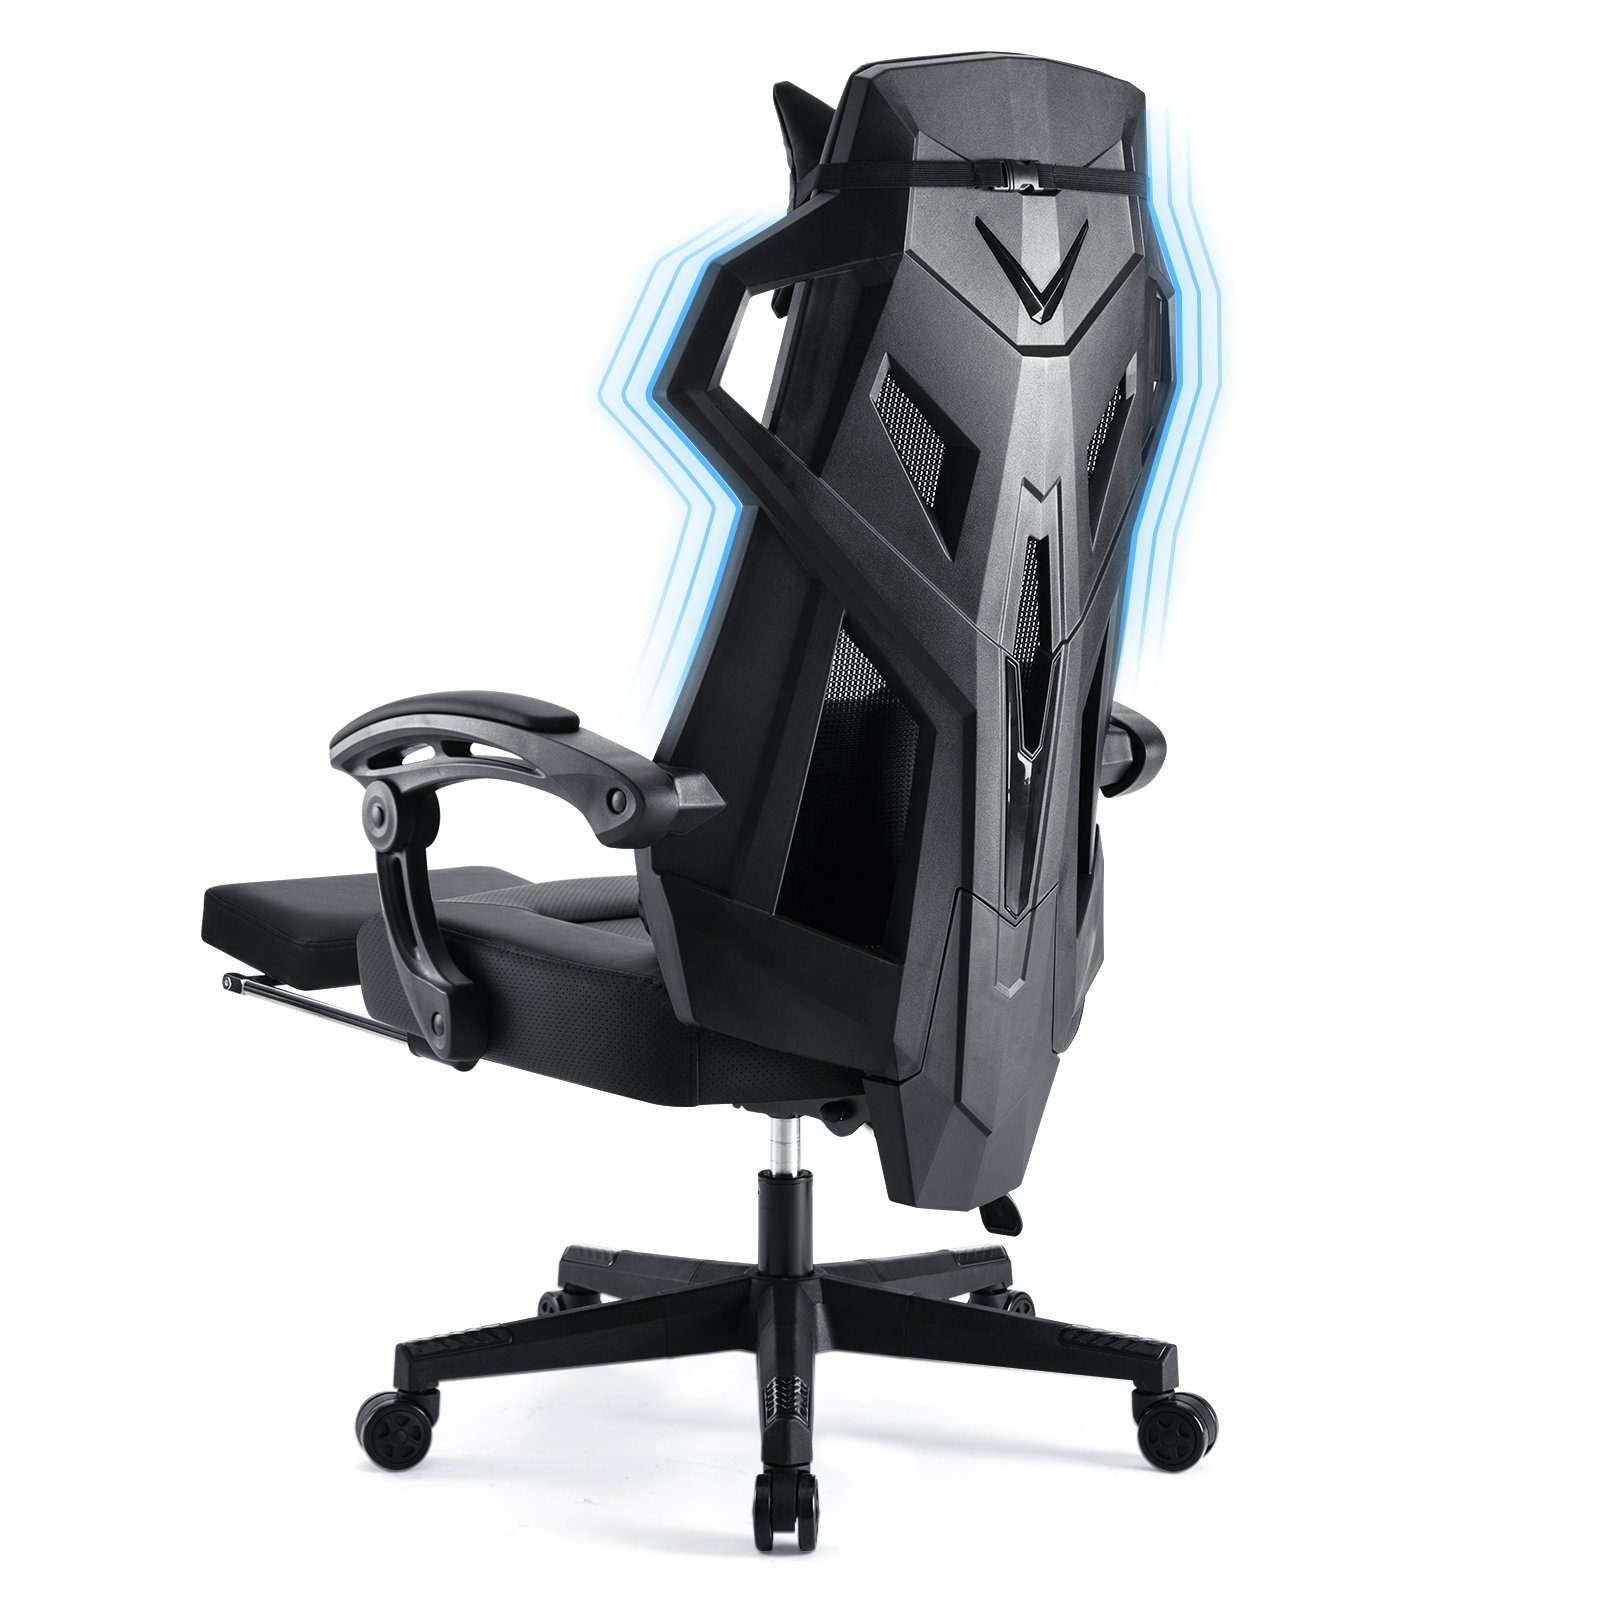 GTPLAYER Bürostuhl Gaming Stuhl Massage